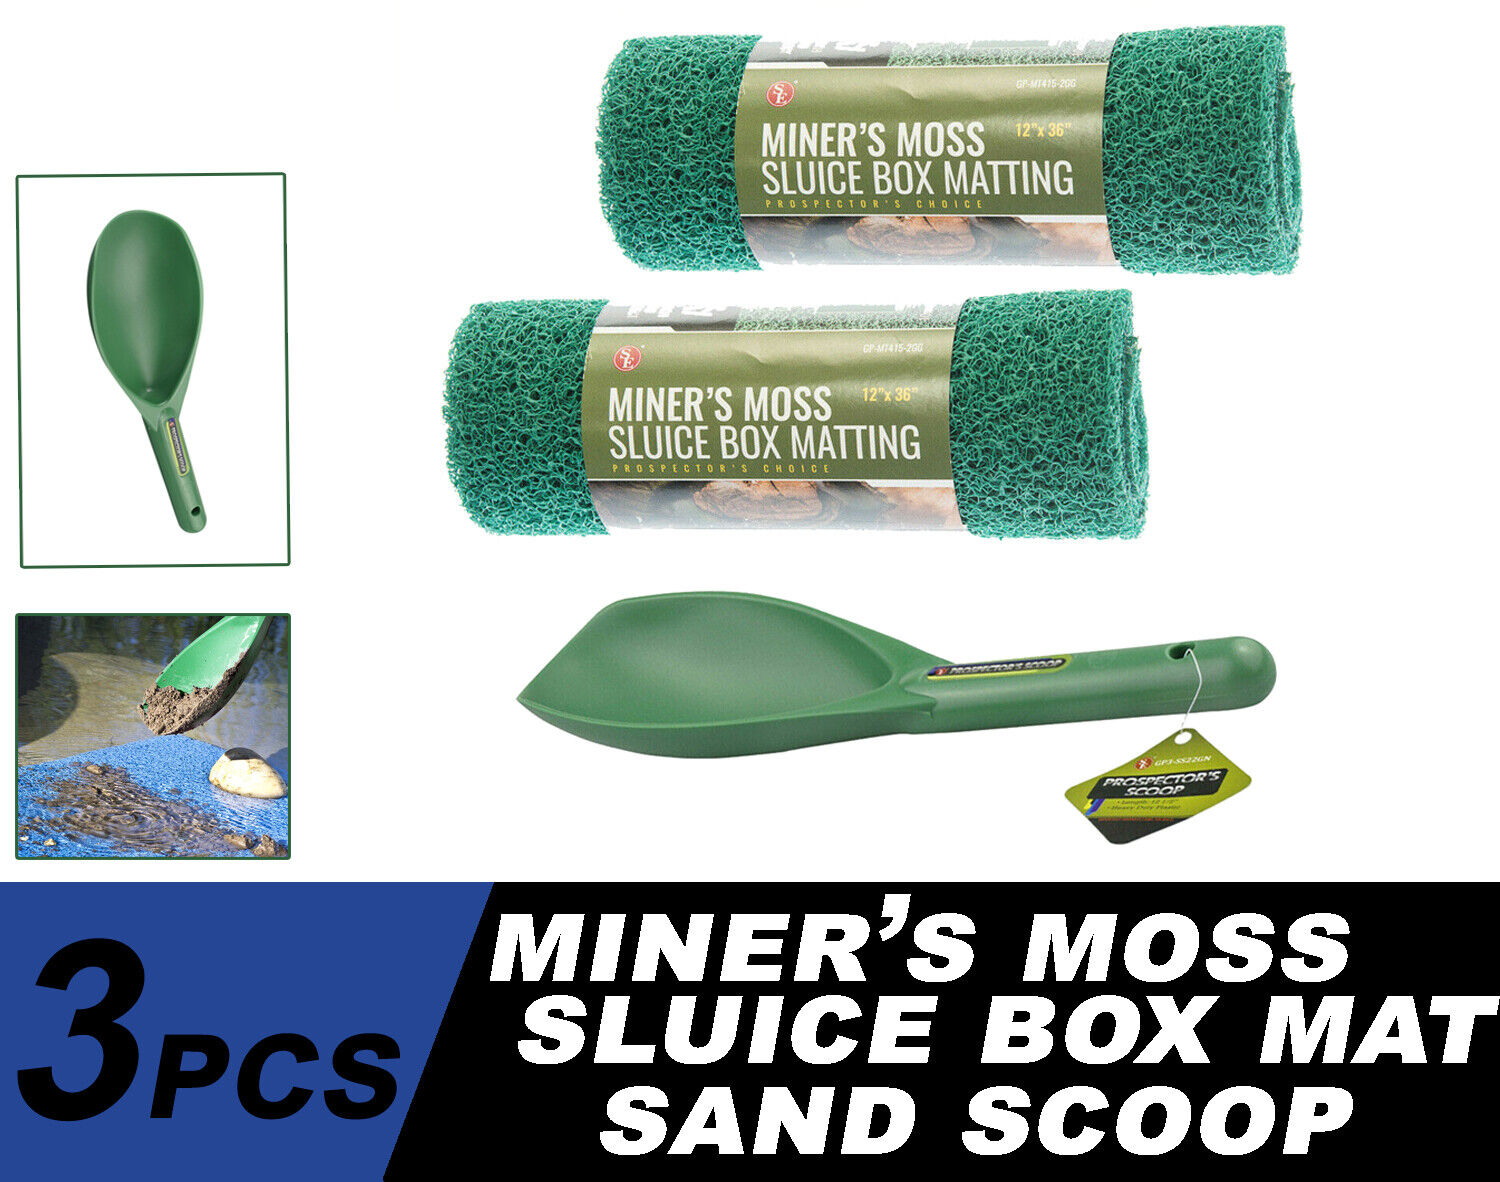 3PC Miner’s Moss 12” x 36” Sluice Box Matting Prospector Sand Scoop Green